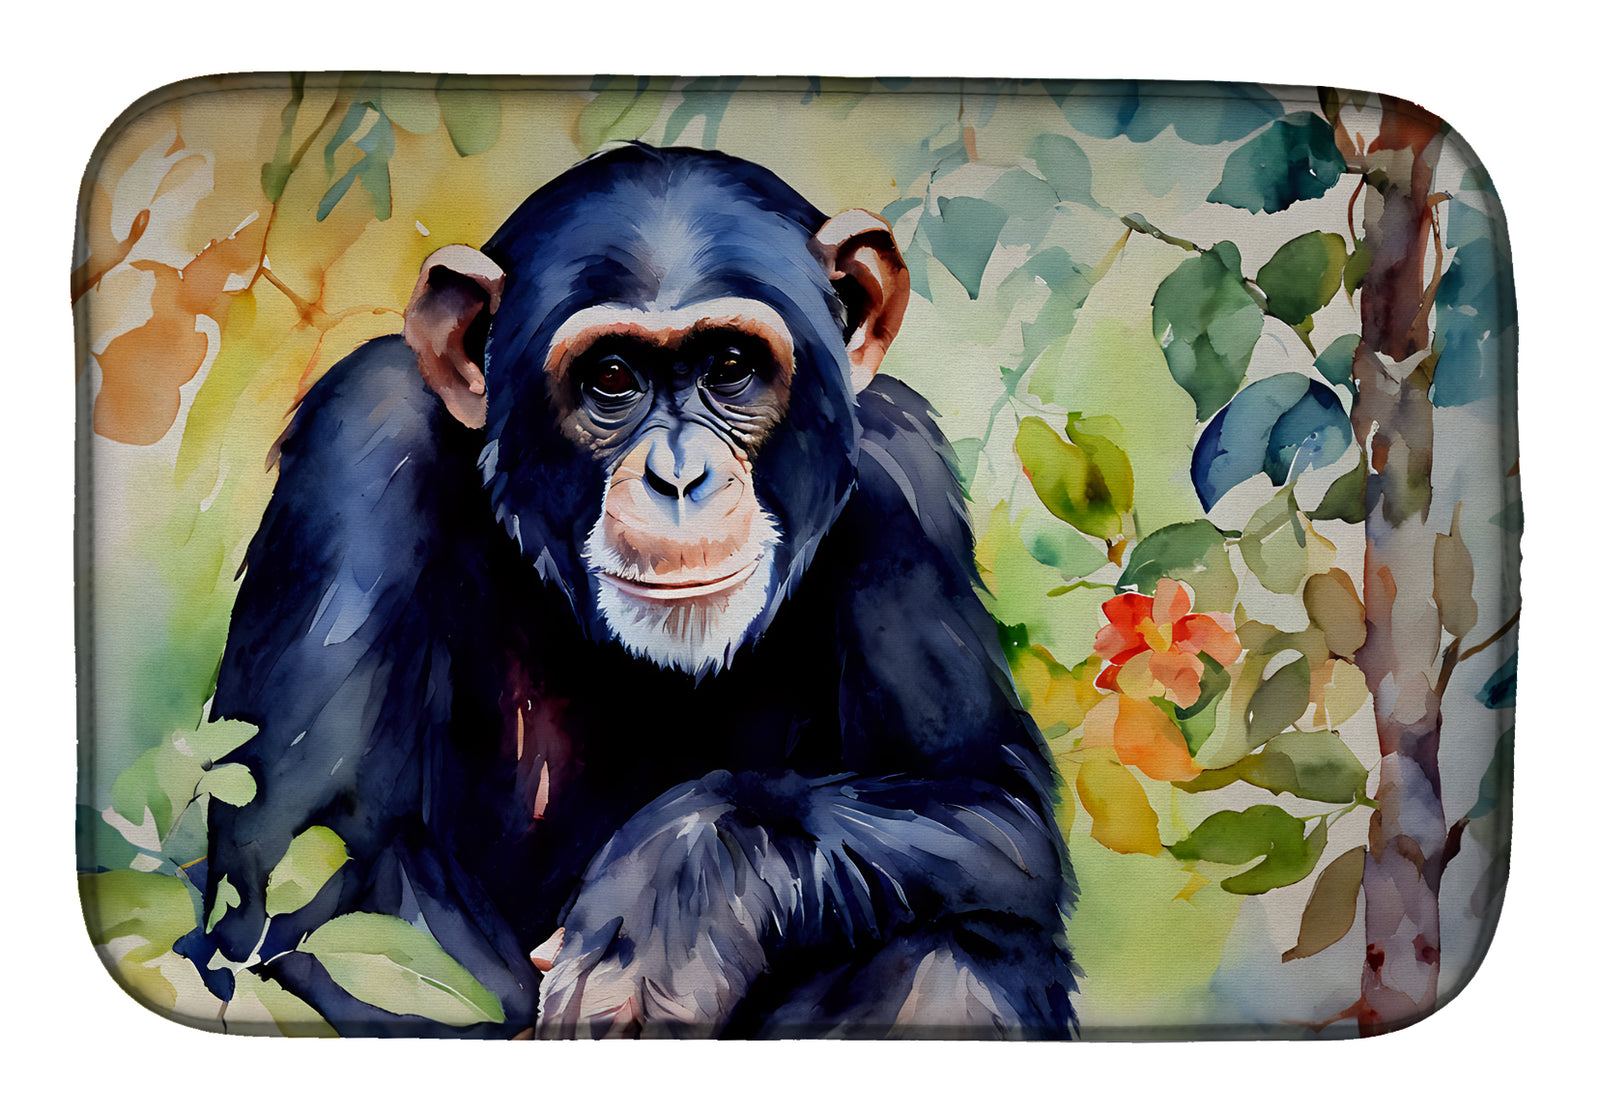 Buy this Chimpanzee Dish Drying Mat